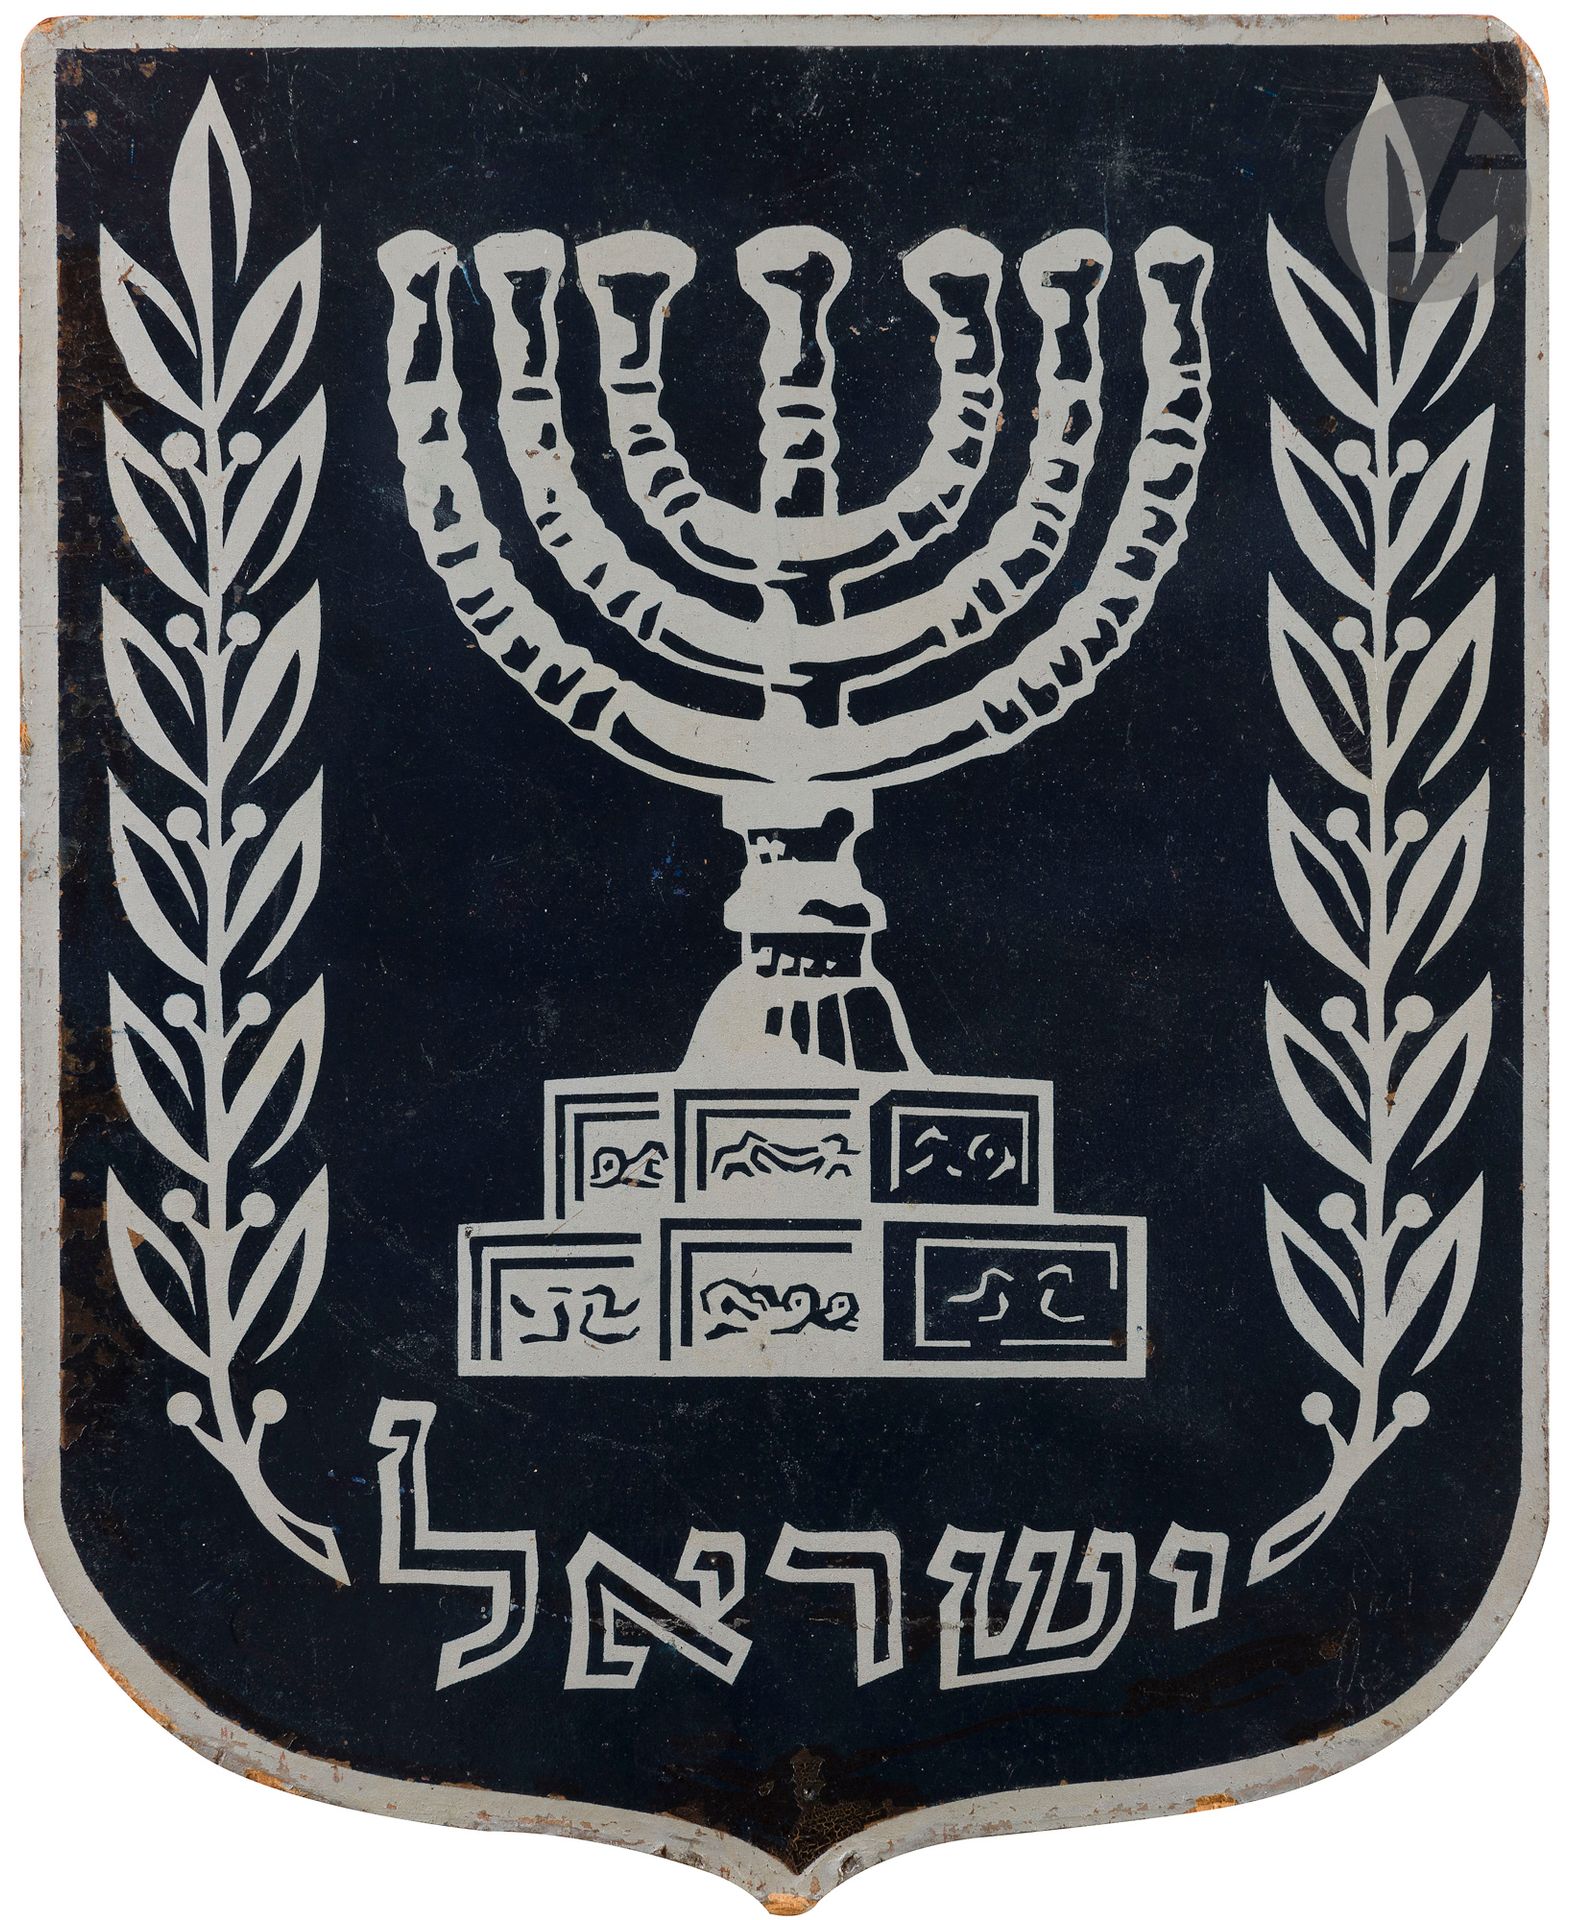 Null [ISRAËL]
Armoiries de l’État d’Israël.
Pochoir sur isorel.
Circa 1950-1960.&hellip;